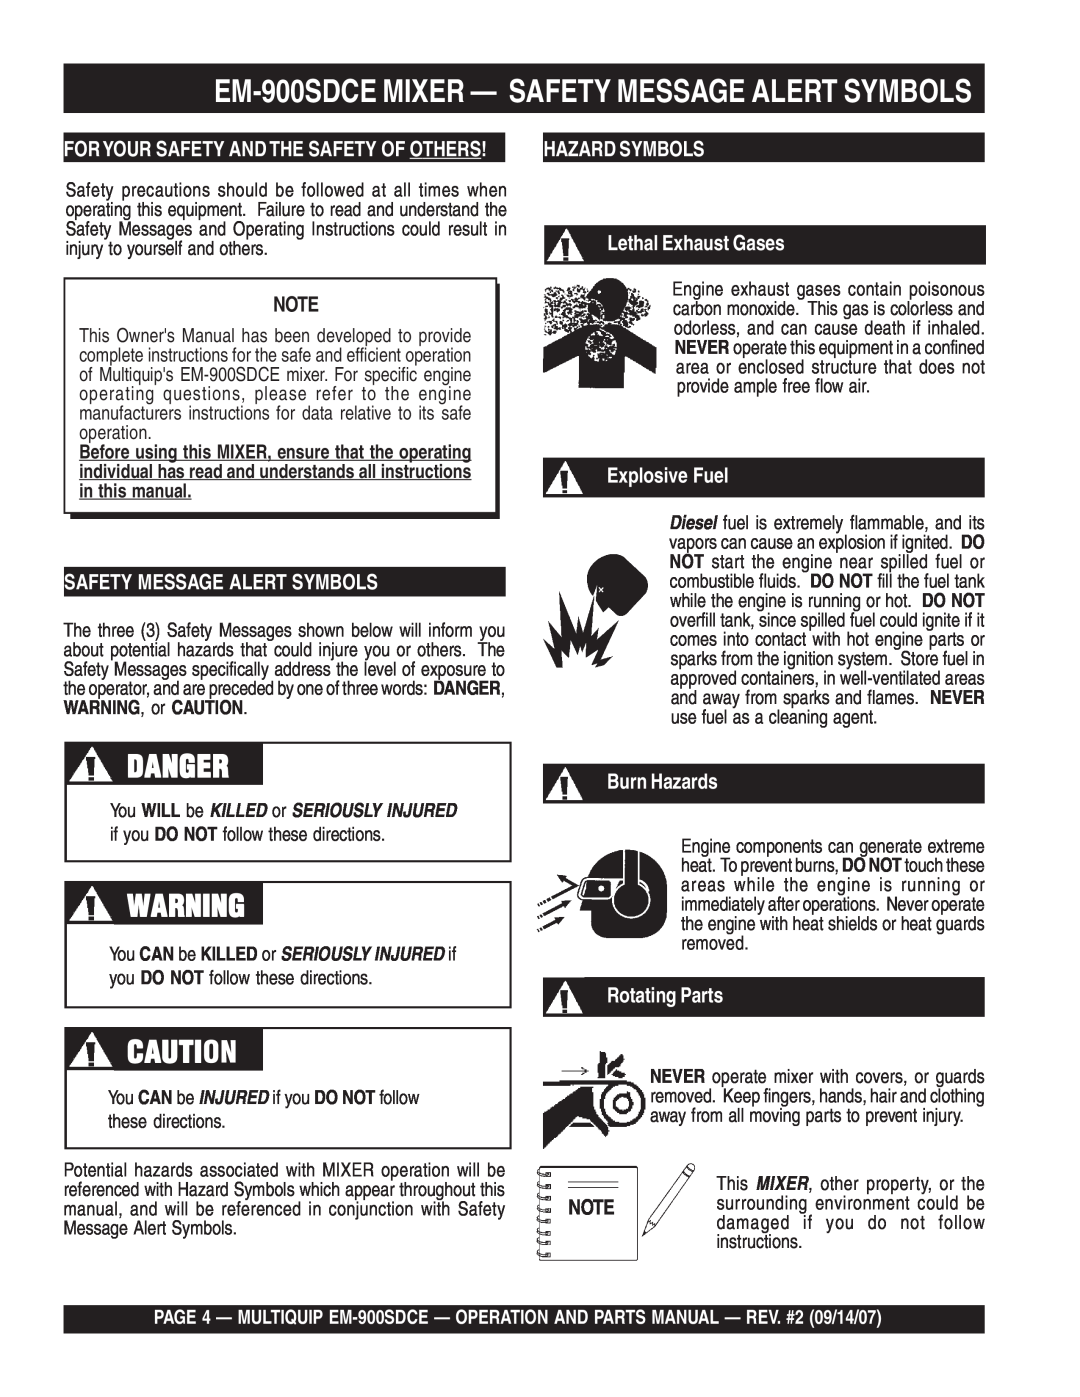 Multiquip manual Danger, EM-900SDCEMIXER — SAFETY MESSAGE ALERT SYMBOLS, Safety Message Alert Symbols, Explosive Fuel 